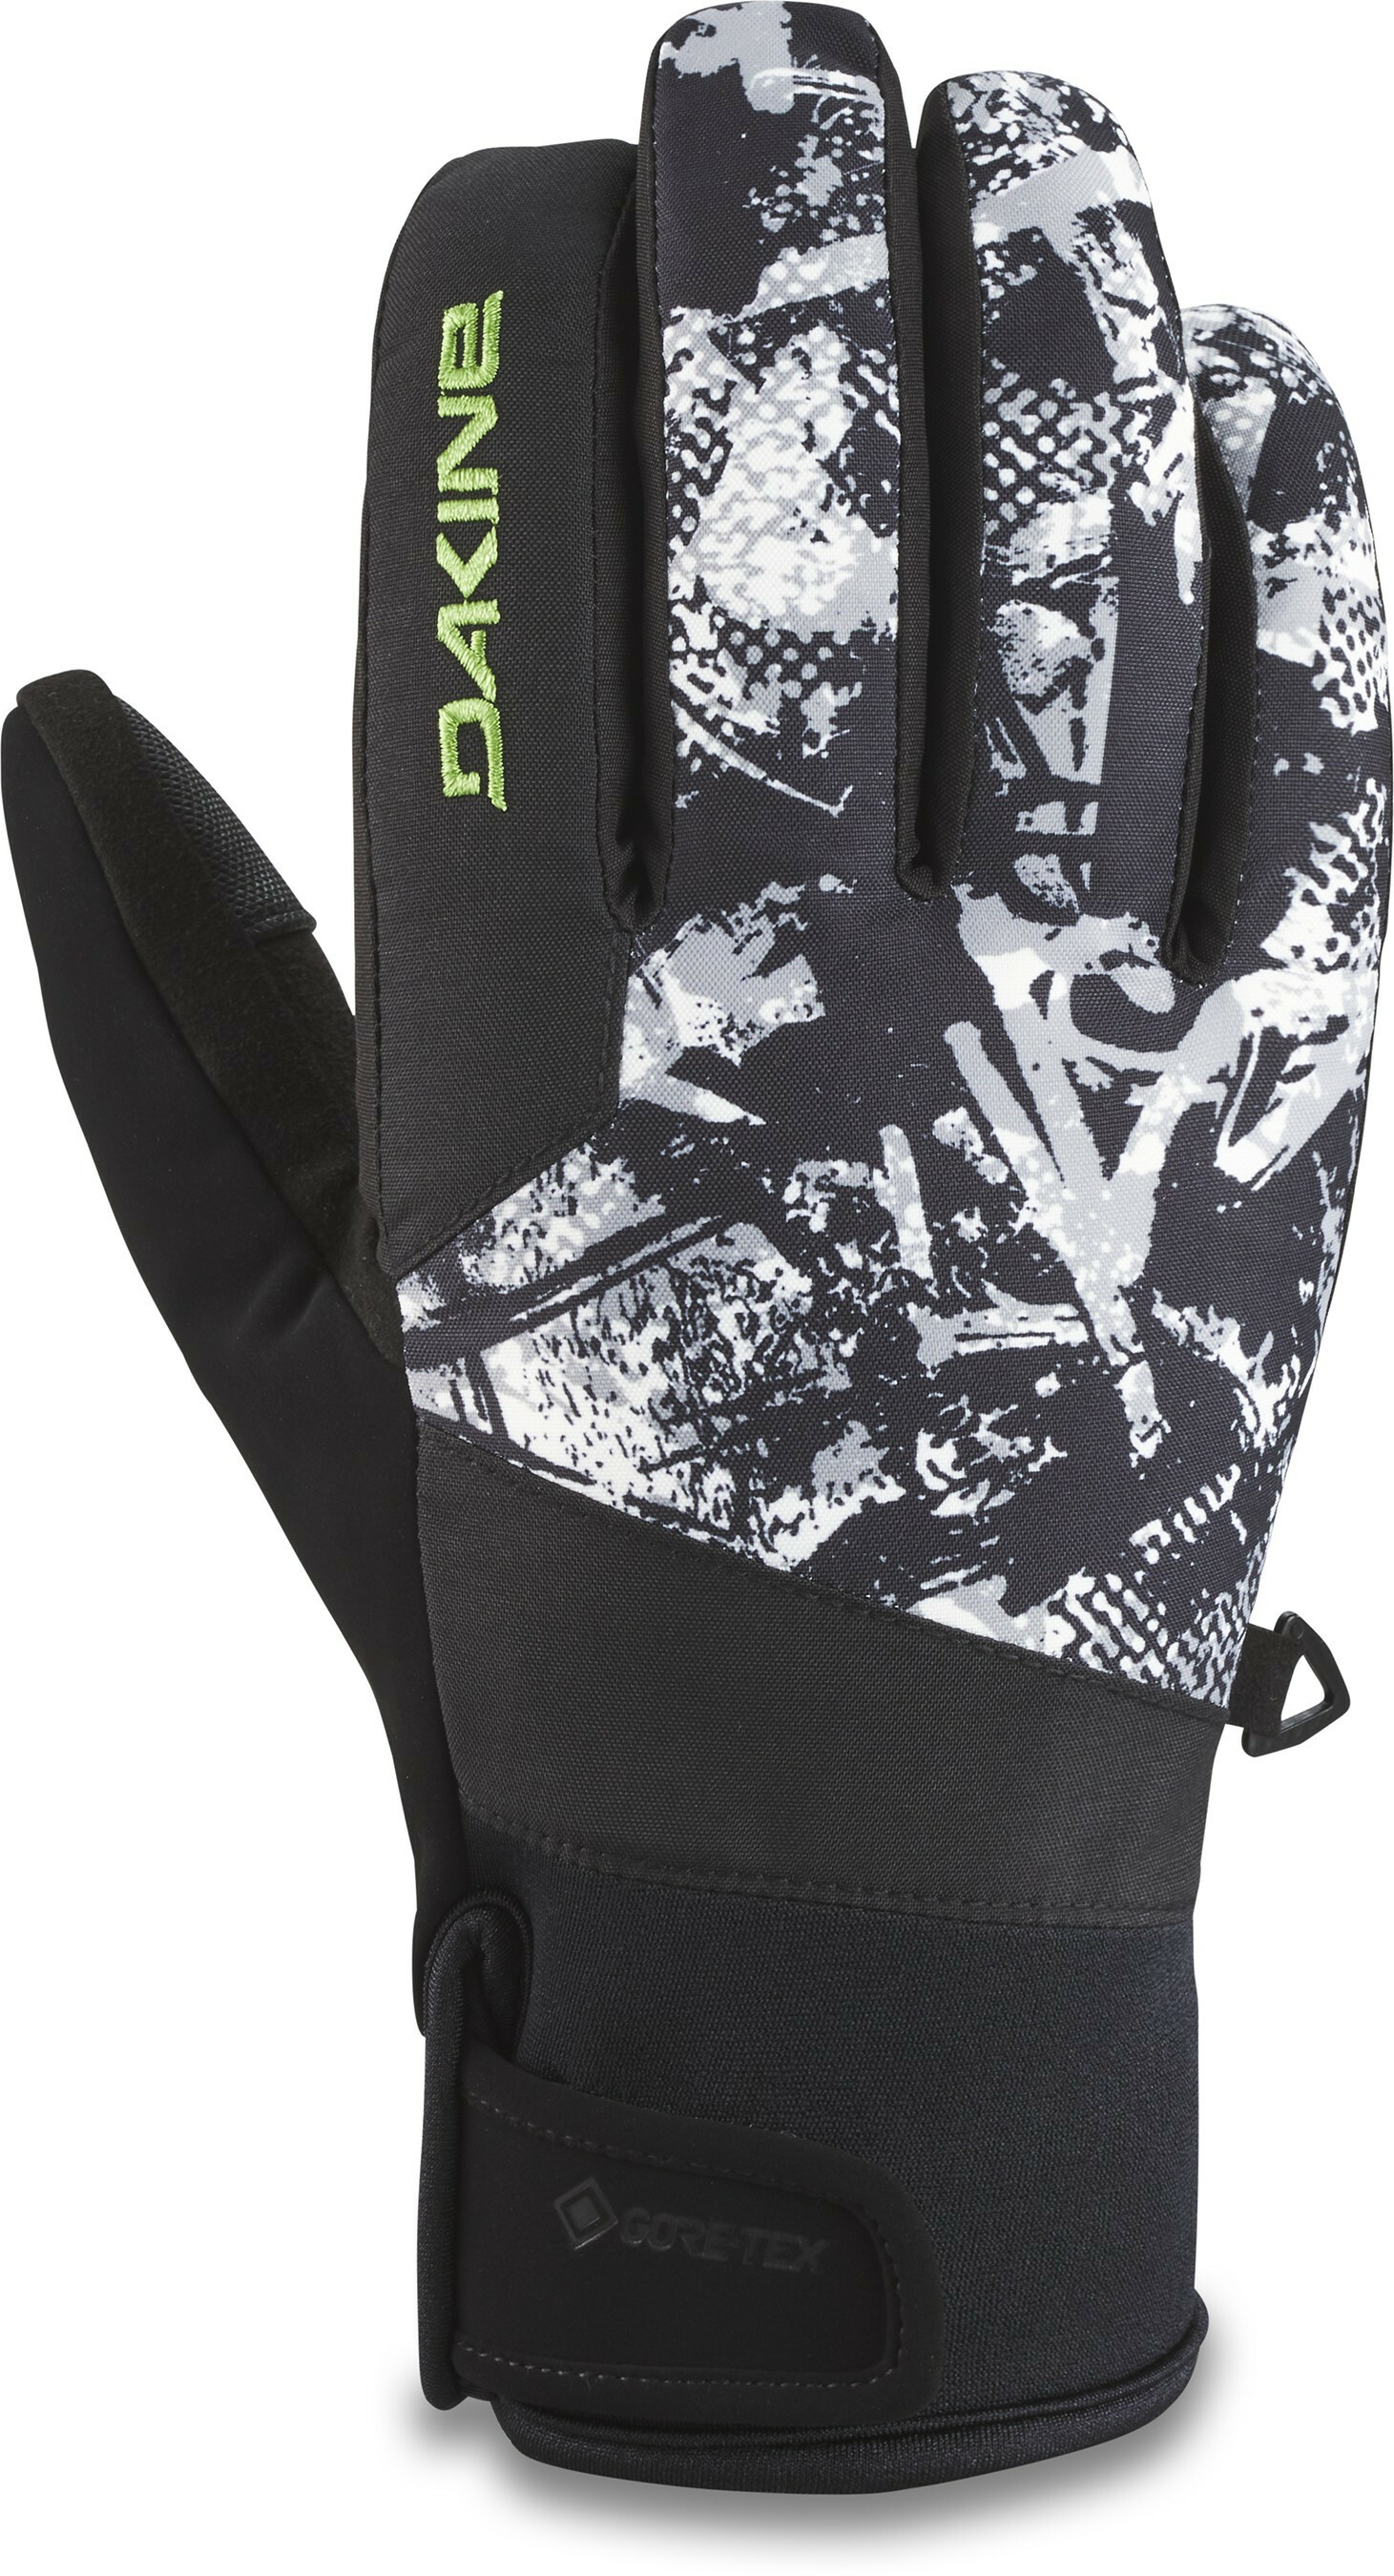 Impreza GORE-TEX Glove